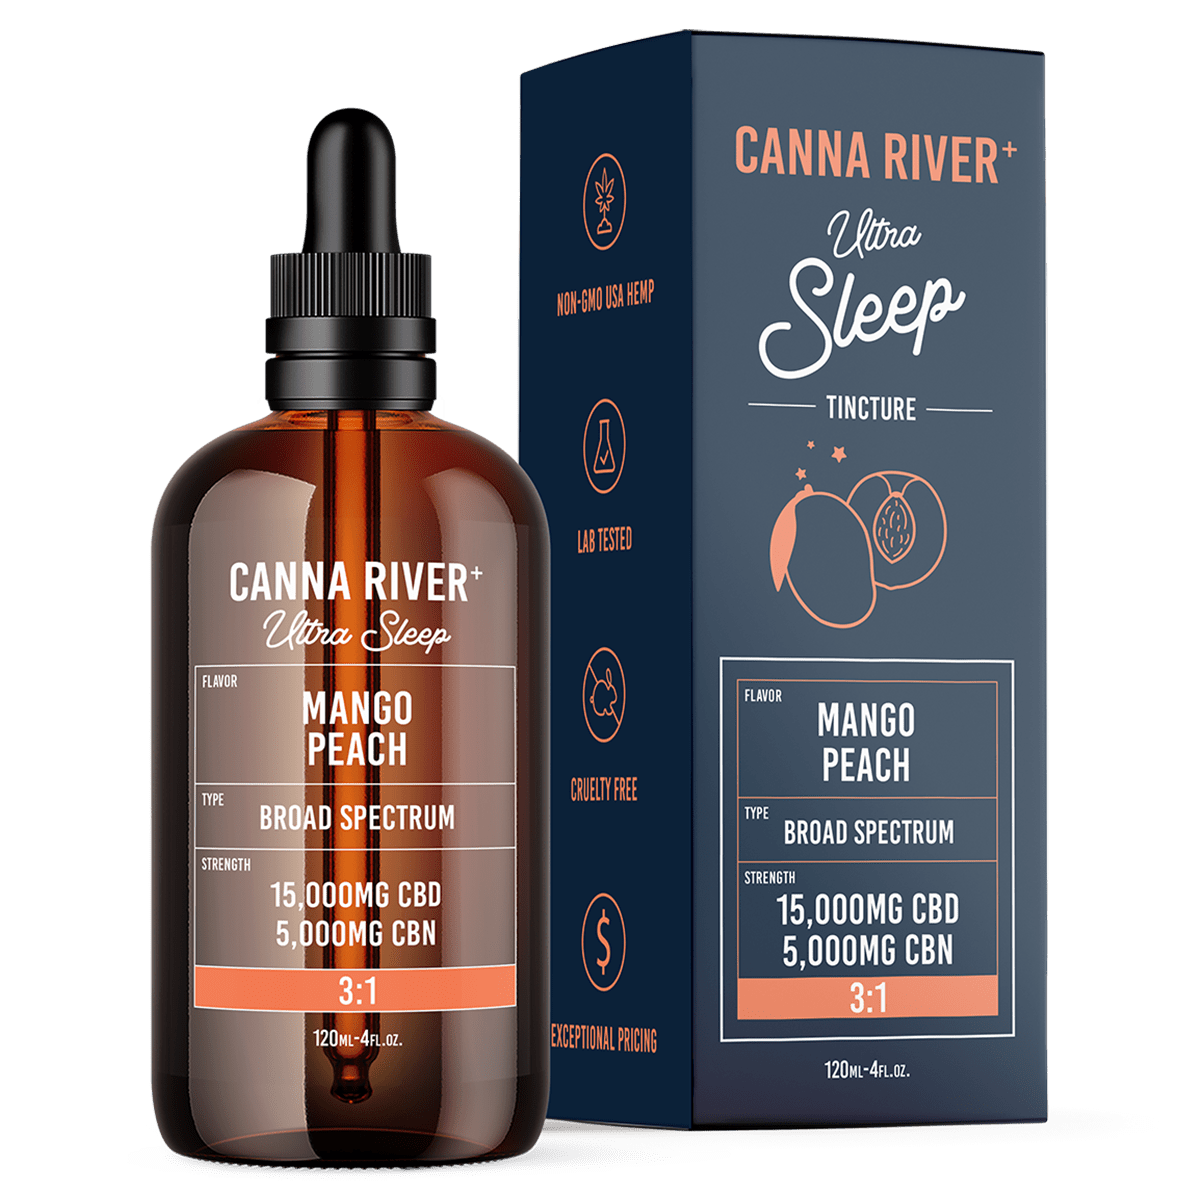 Canna River - Broad Spectrum CBD/CBN Ultra Sleep Tincture - Mango Peach - 120mL